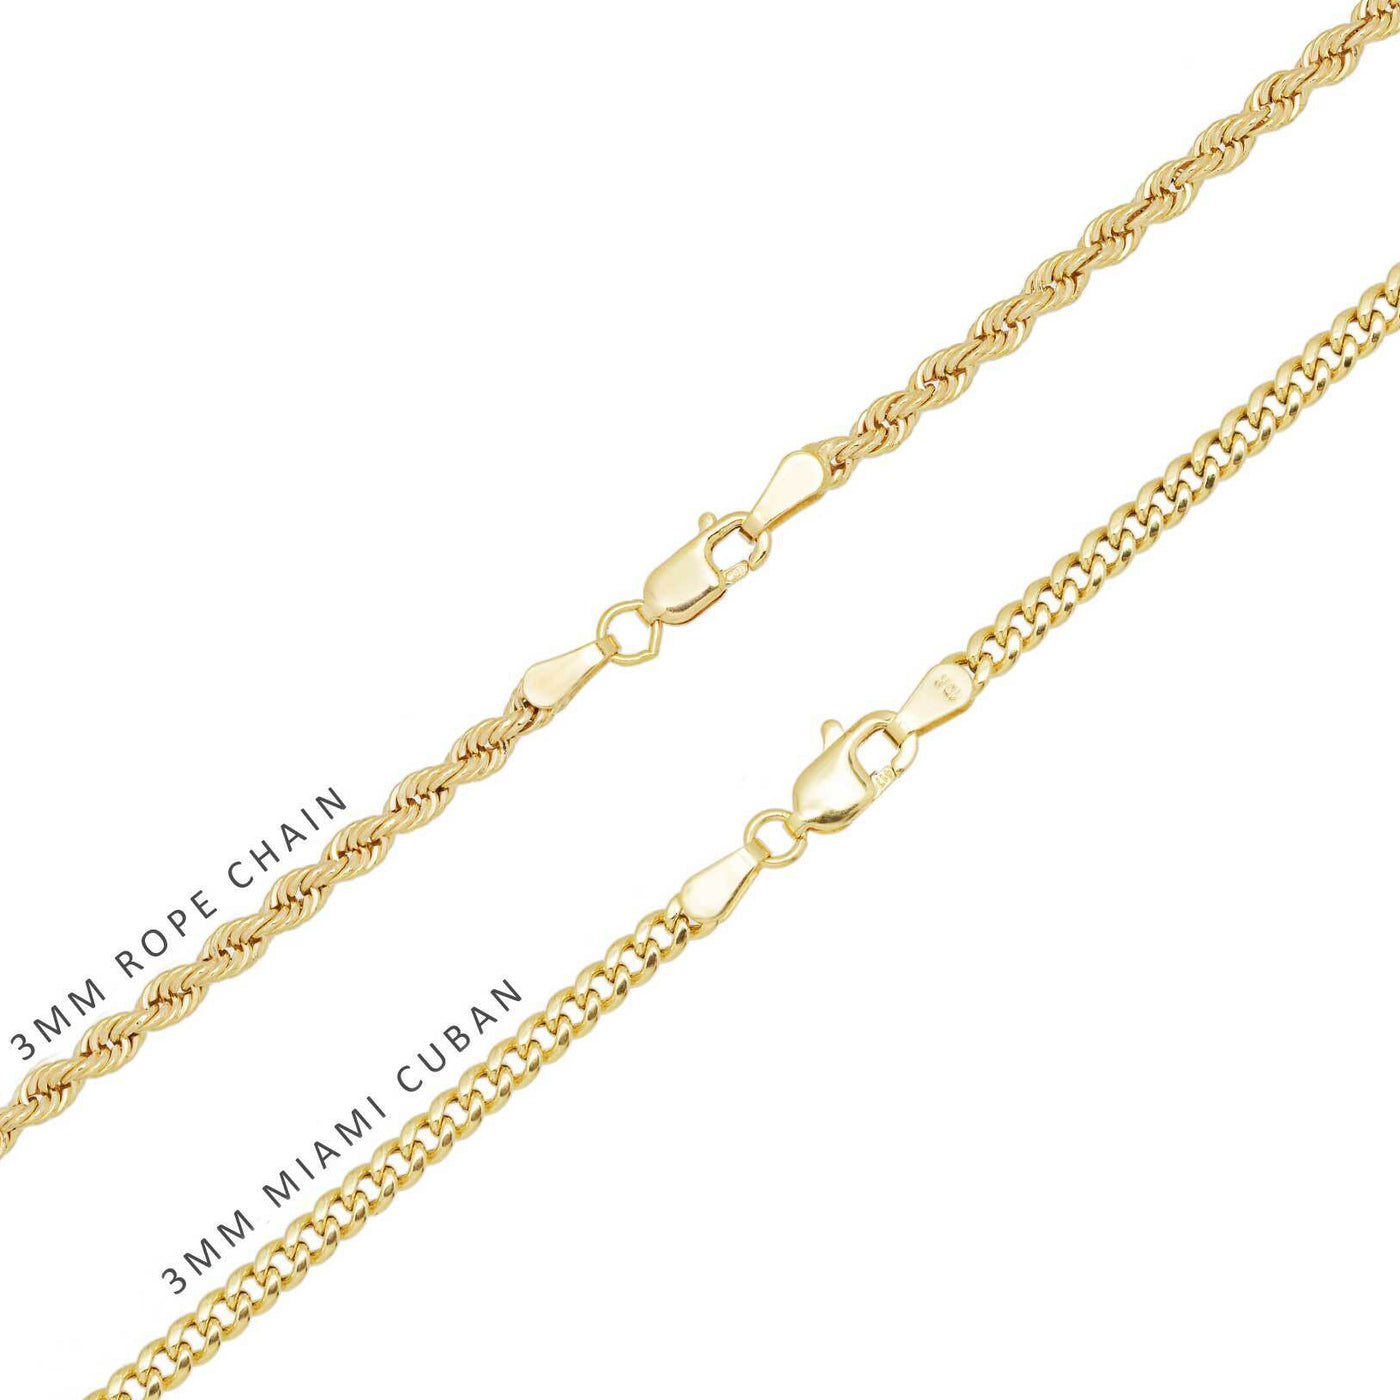 Roaring Lion Head Crown Pendant & Chain Necklace Set 10K Yellow Gold